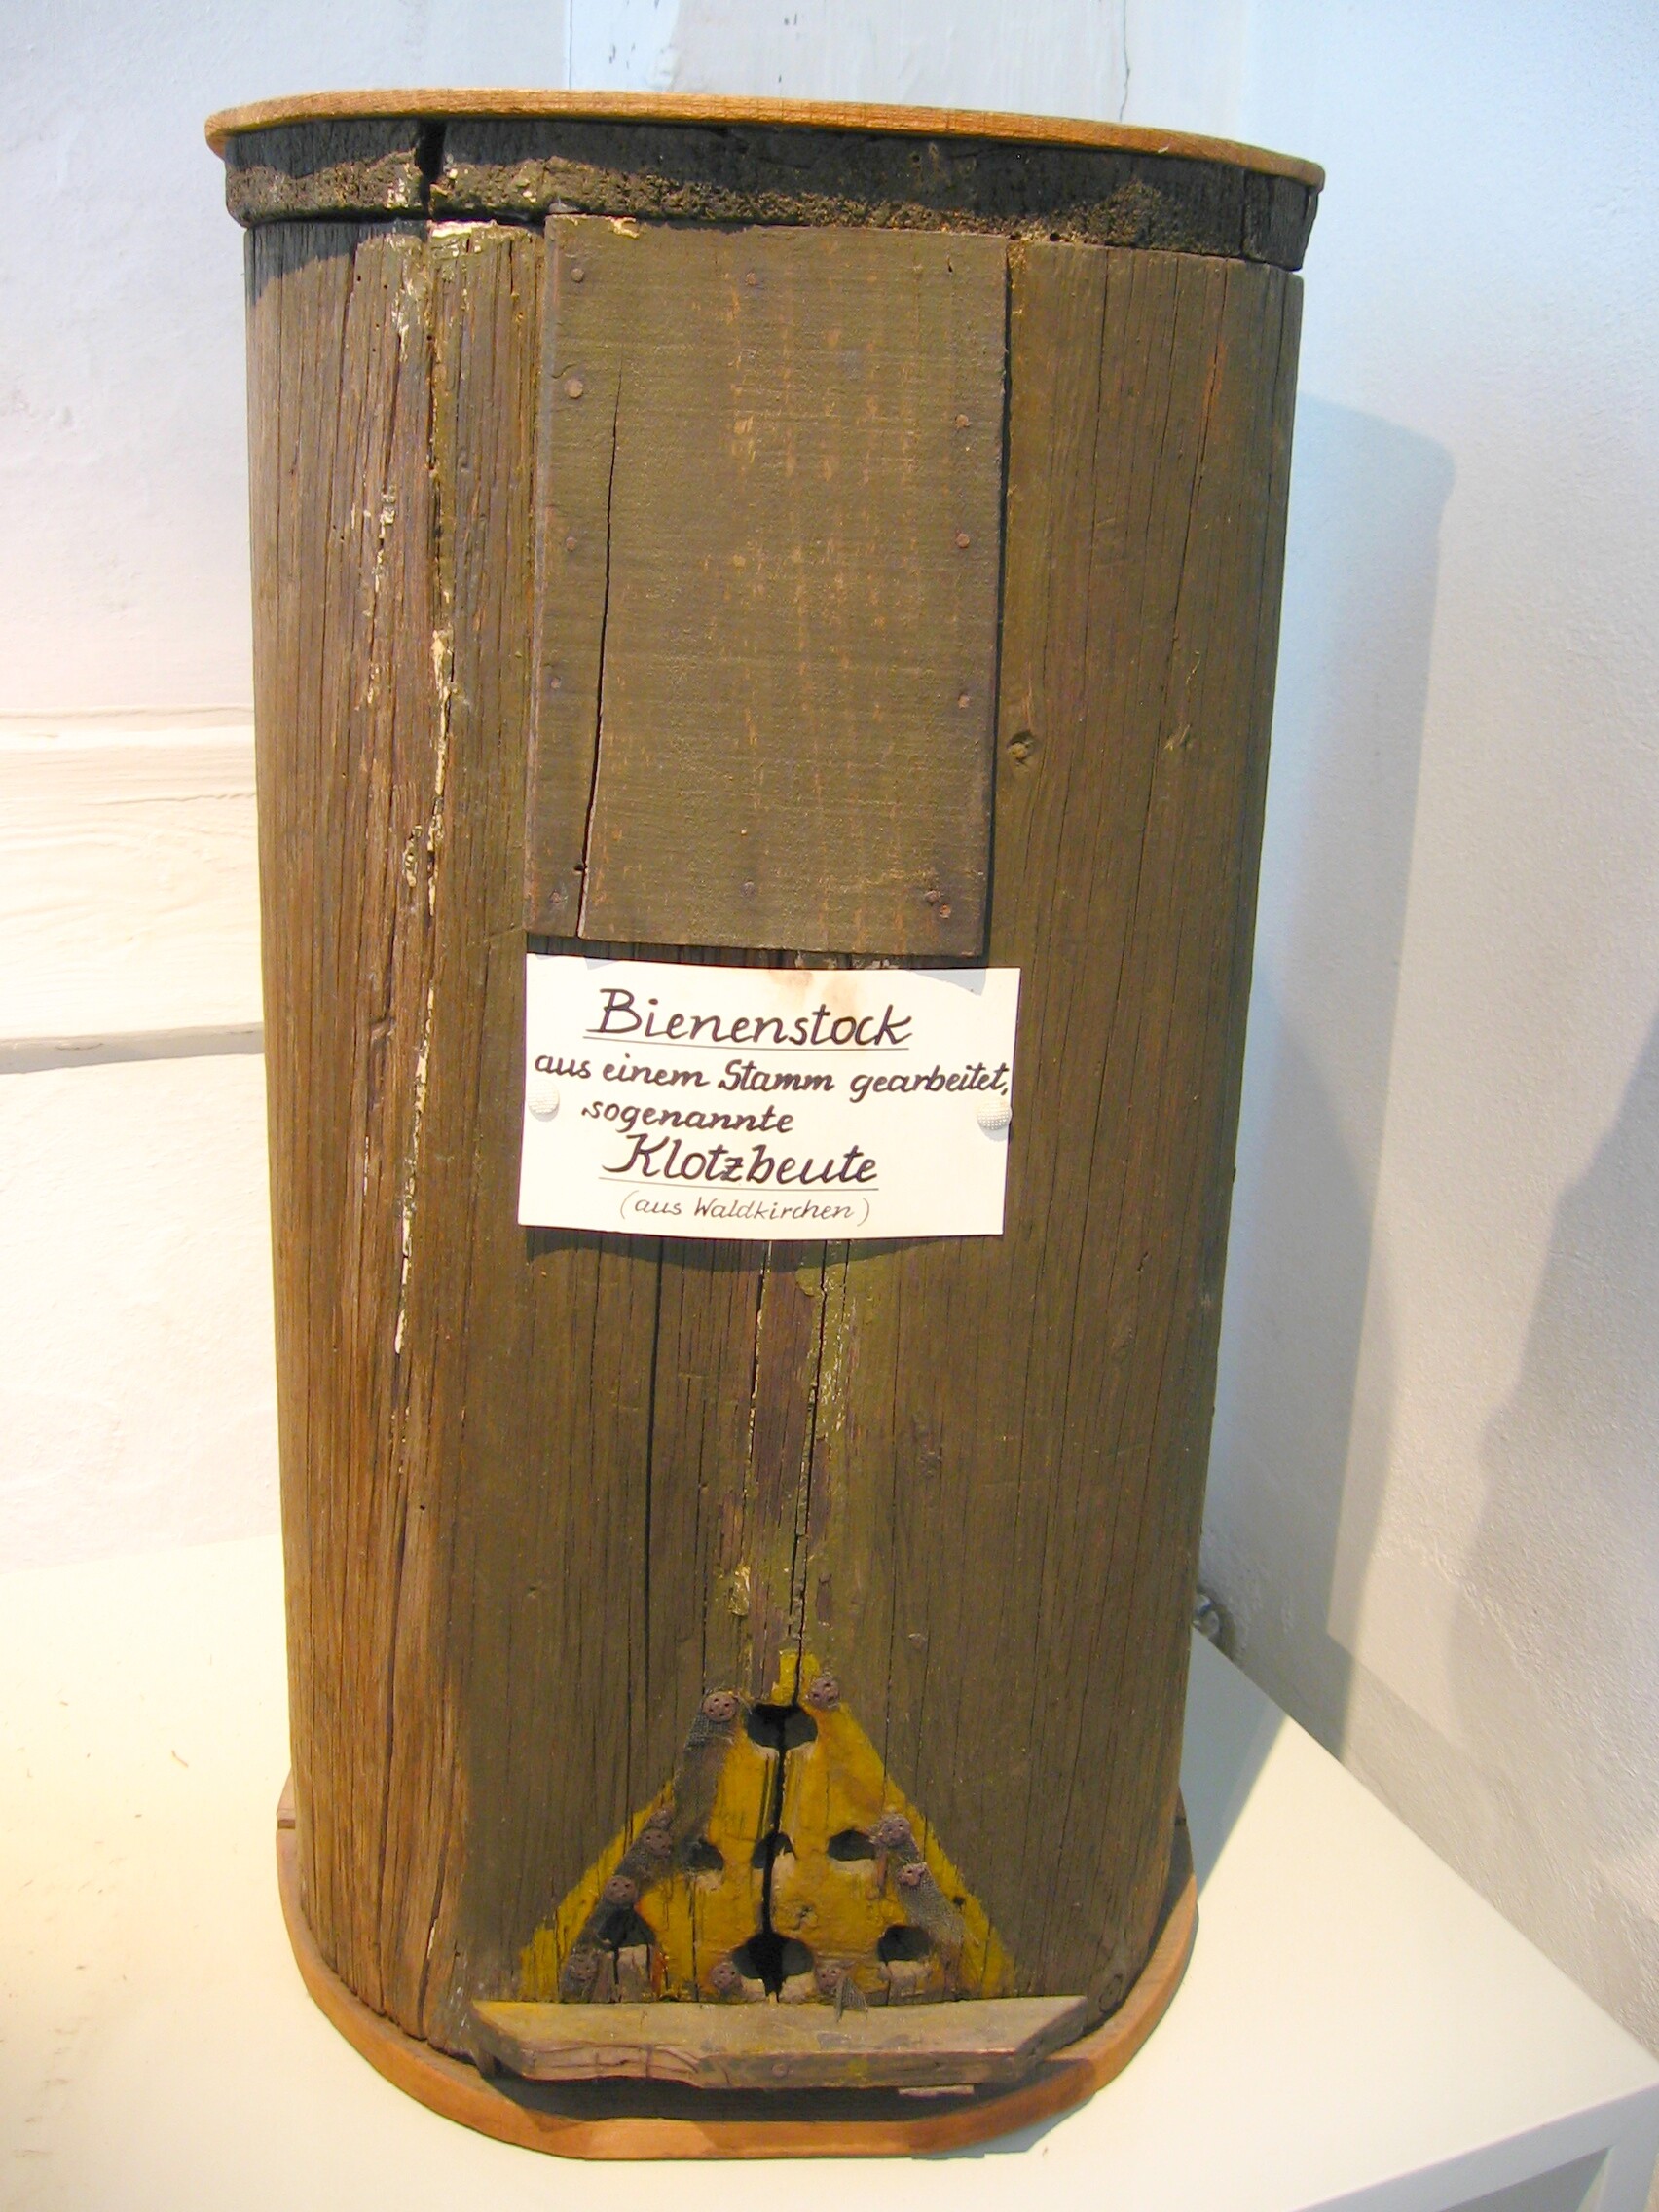 Bienenstock oder Klotzbeute (Stadtmuseum Lengenfeld CC BY-NC-SA)